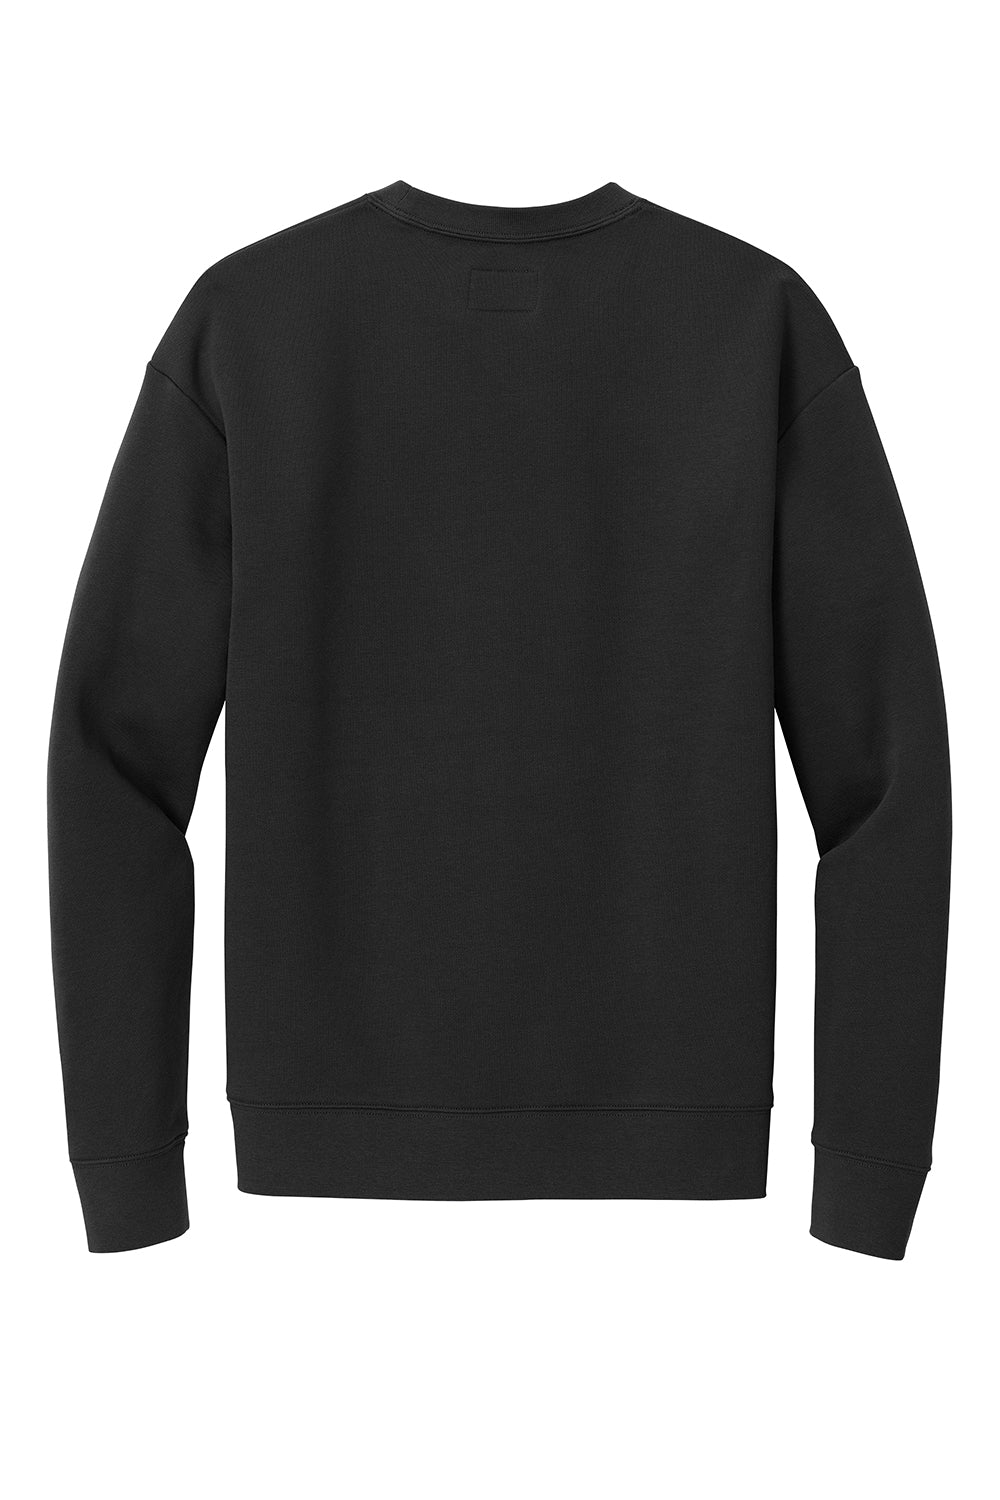 New Era NEA527 Mens Heritage Fleece Crewneck Sweatshirt w/ Pocket Black Flat Back